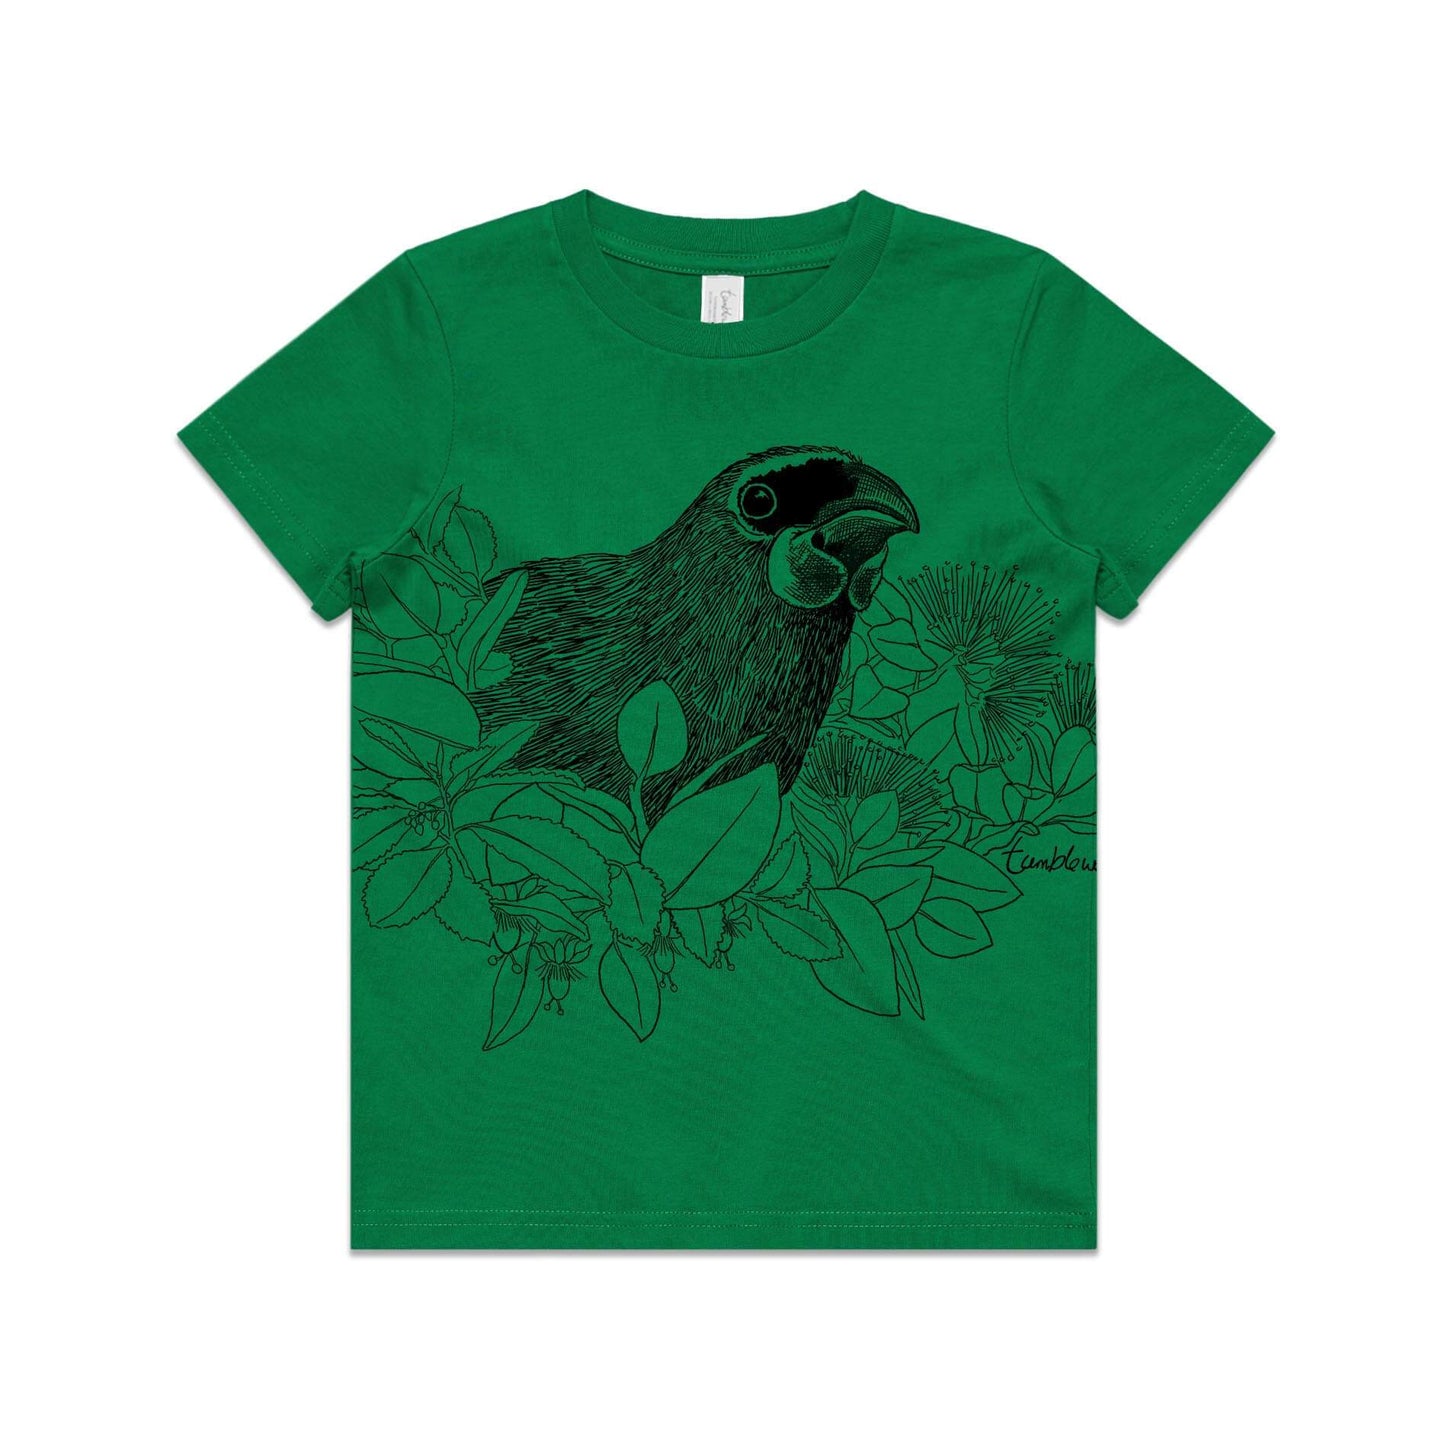 Green, cotton kids' t-shirt with screen printed Kids kōkako design.